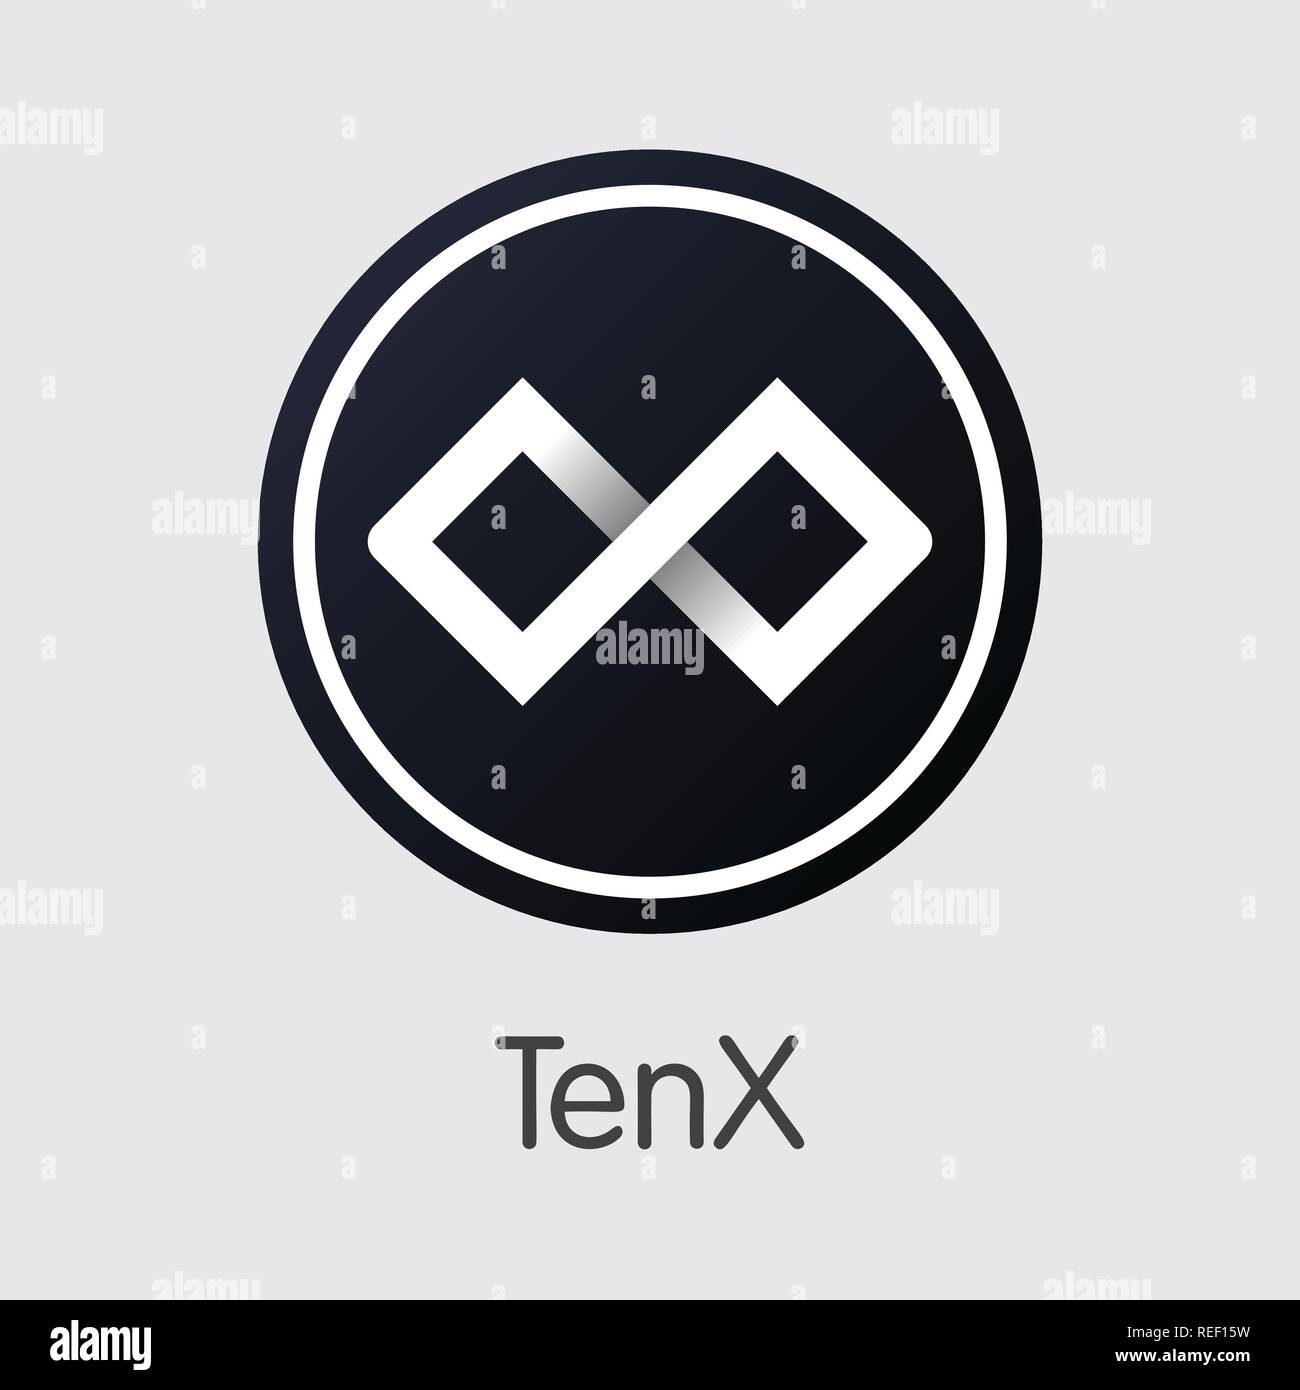 PAY - Tenx. The Trade Logo of Money or Market Emblem. Stock Vector